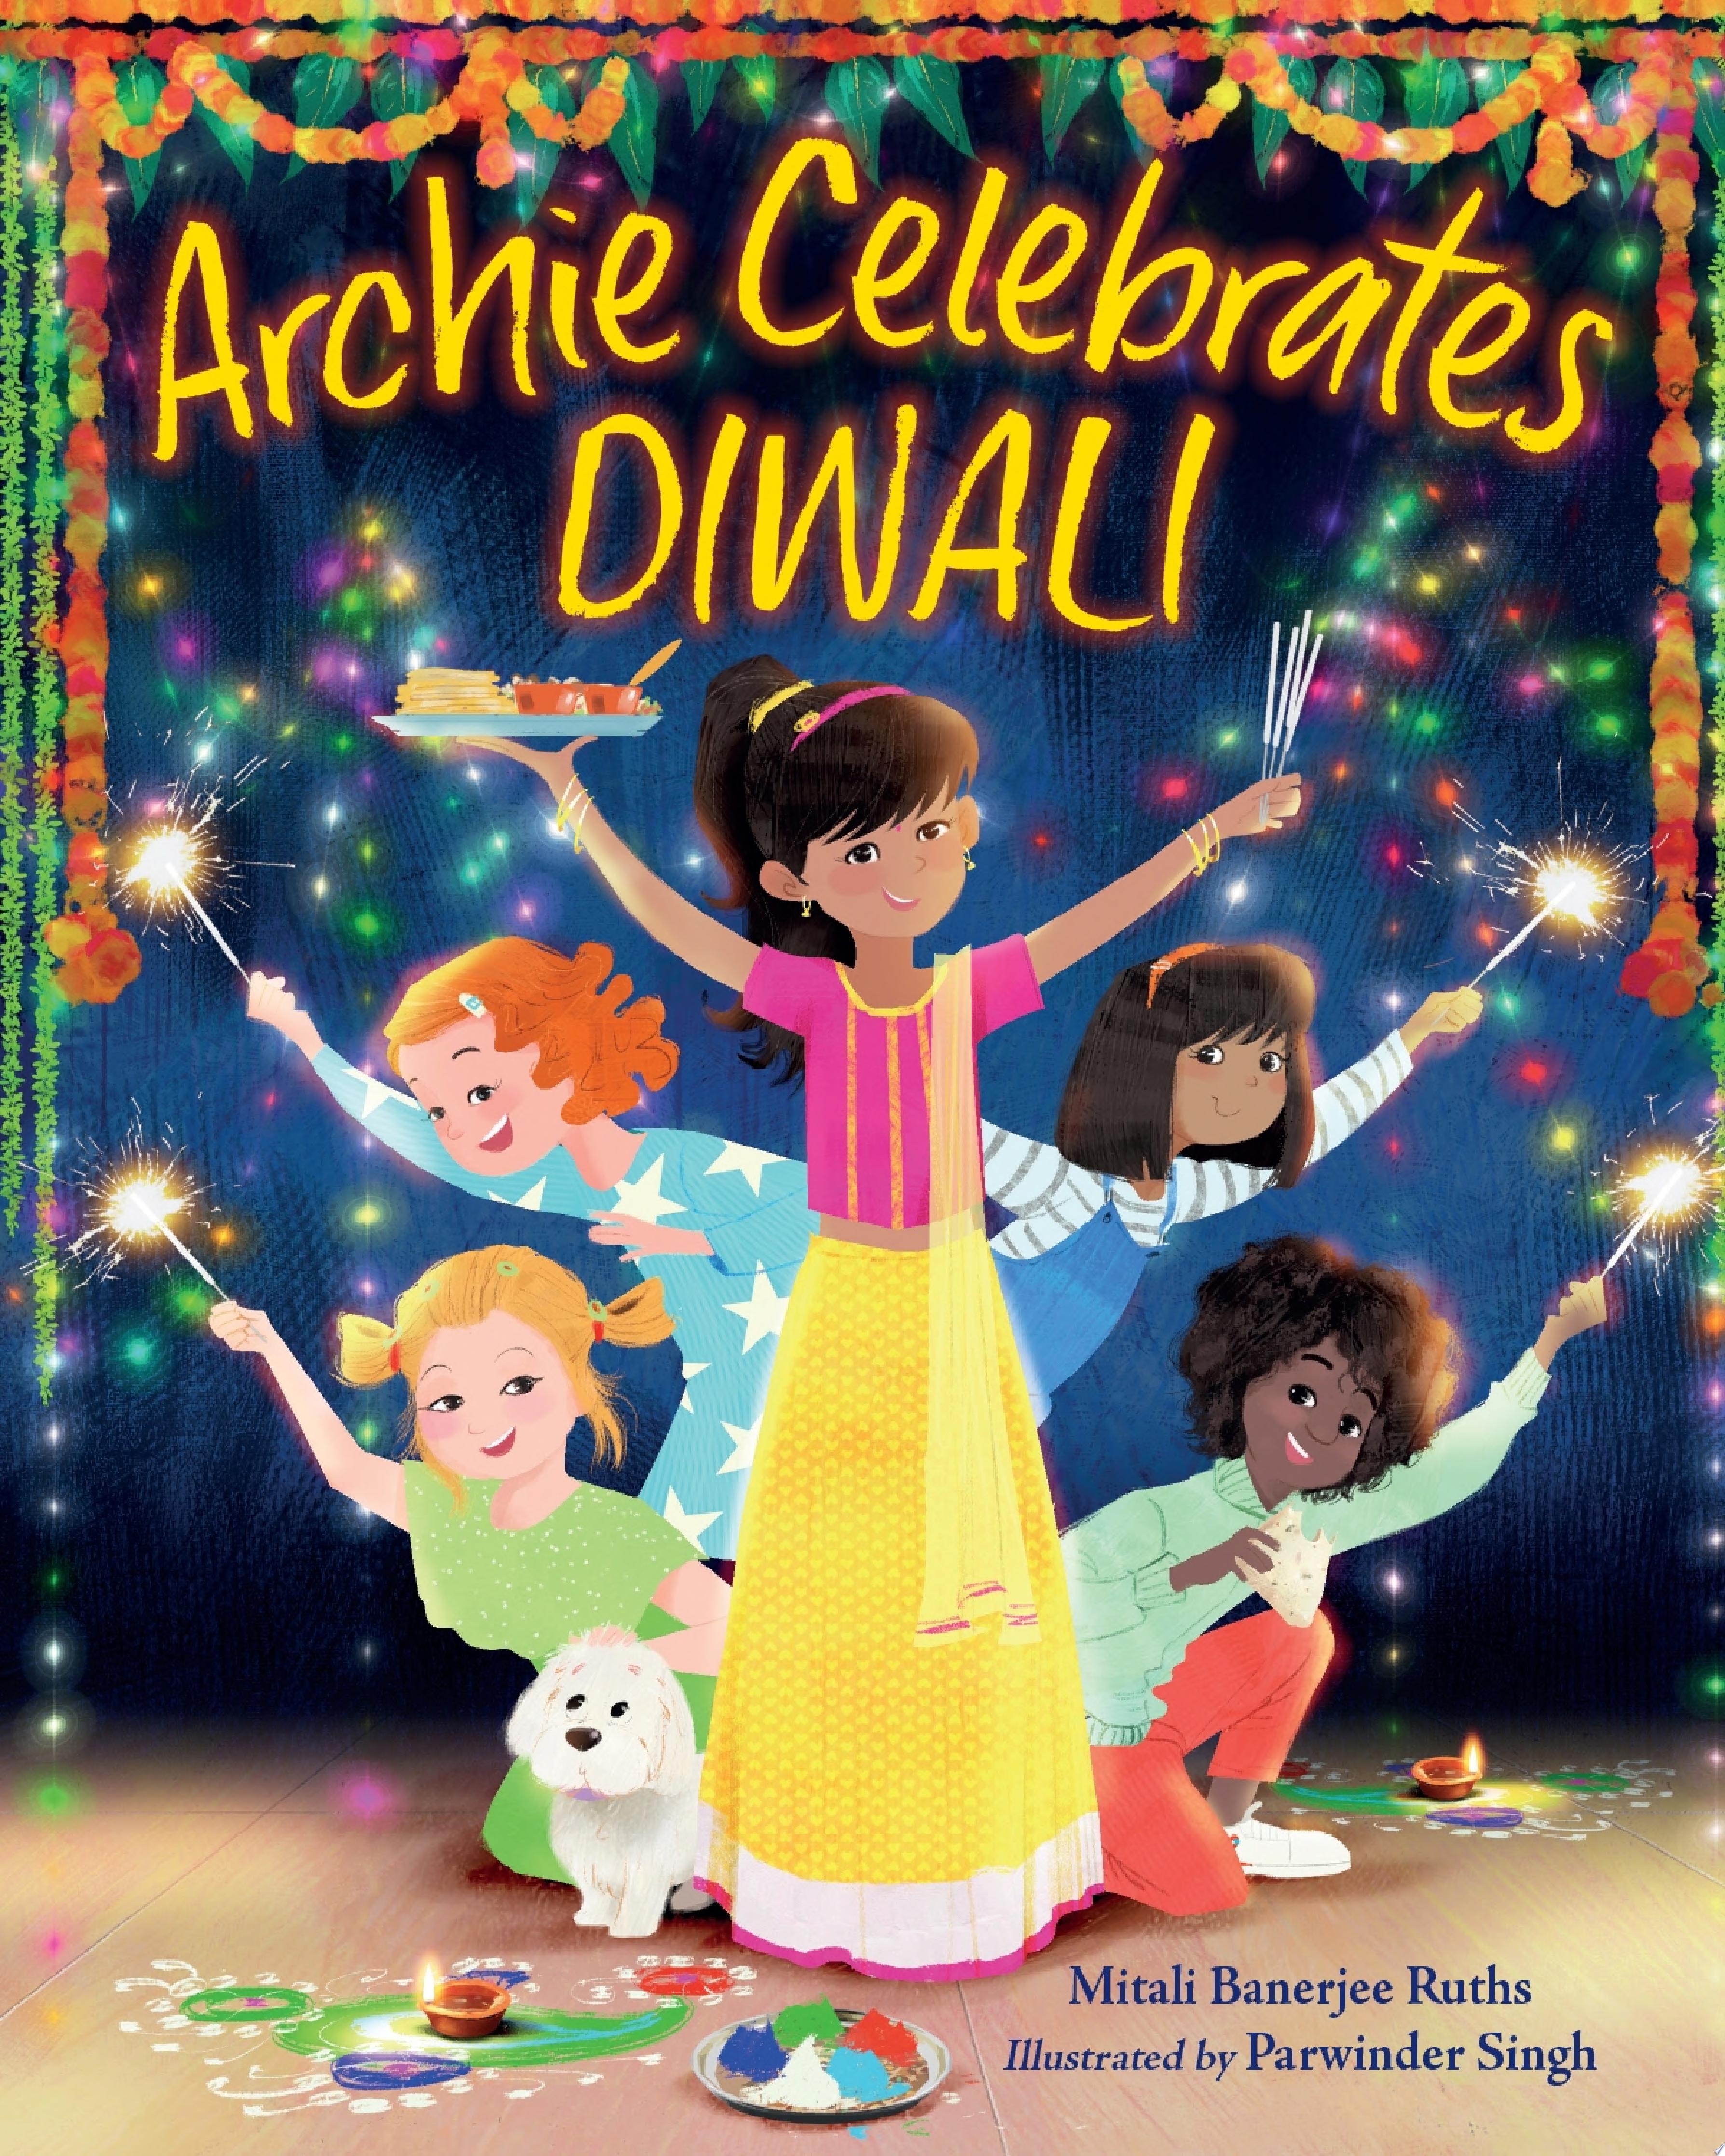 Image for "Archie Celebrates Diwali"